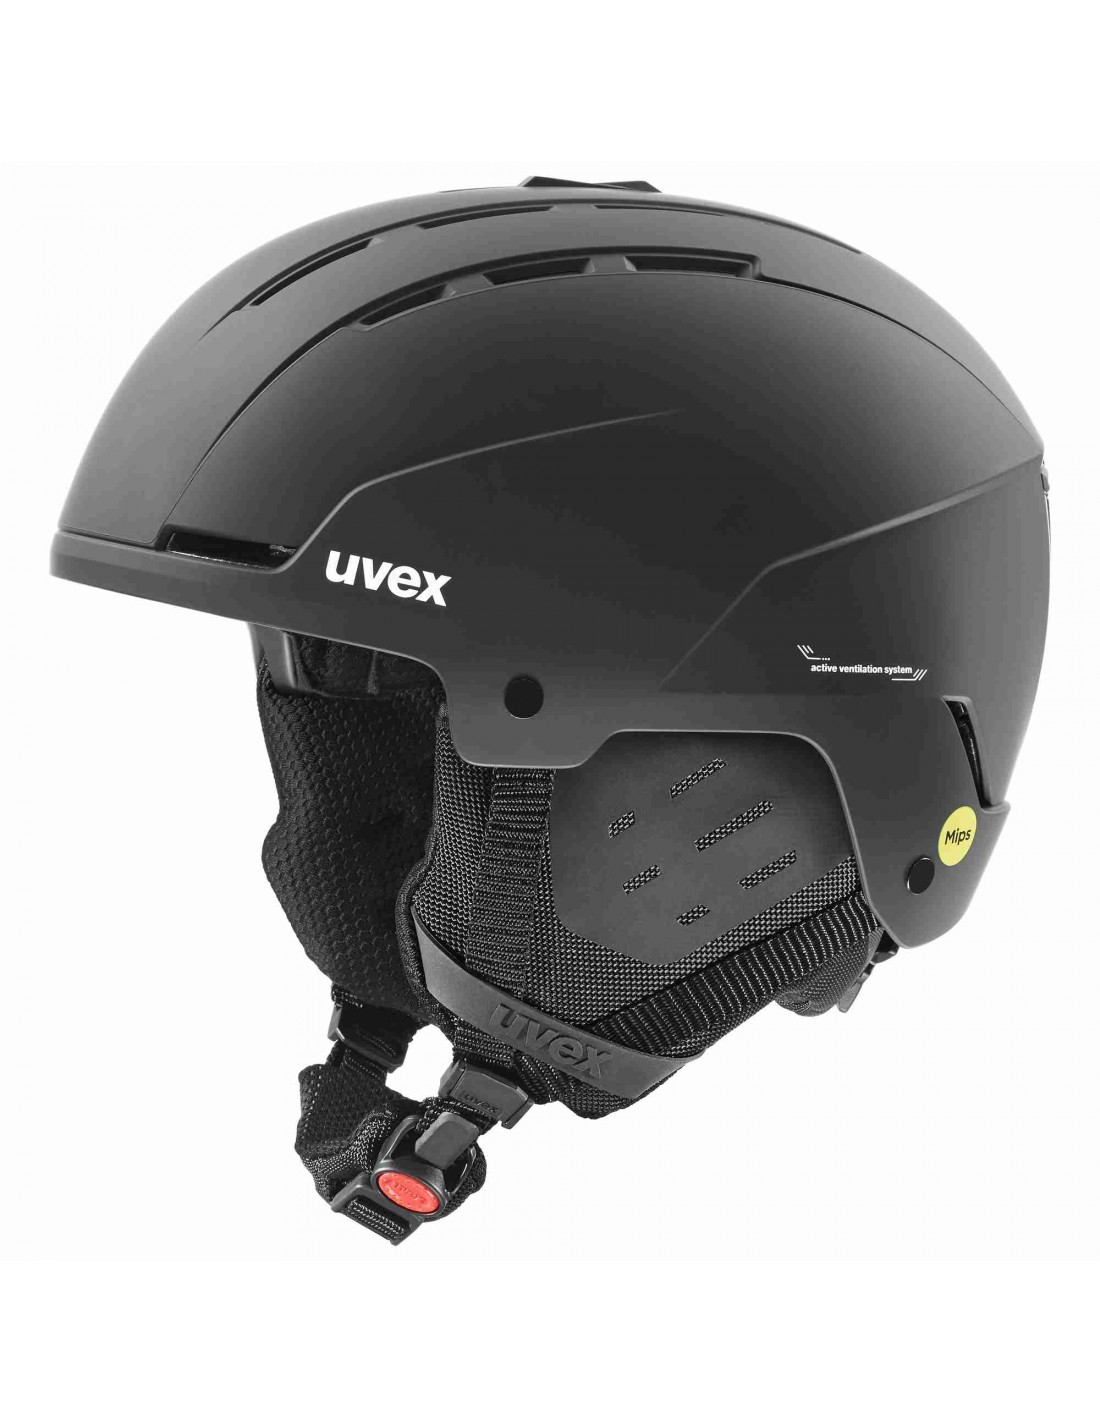 Uvex Skihelm Stance Mips, black matt Skihelmgröße - 51 - 55 cm, Skihelmbauweise - Freeride, Skihelmfarbe - Black , von Uvex